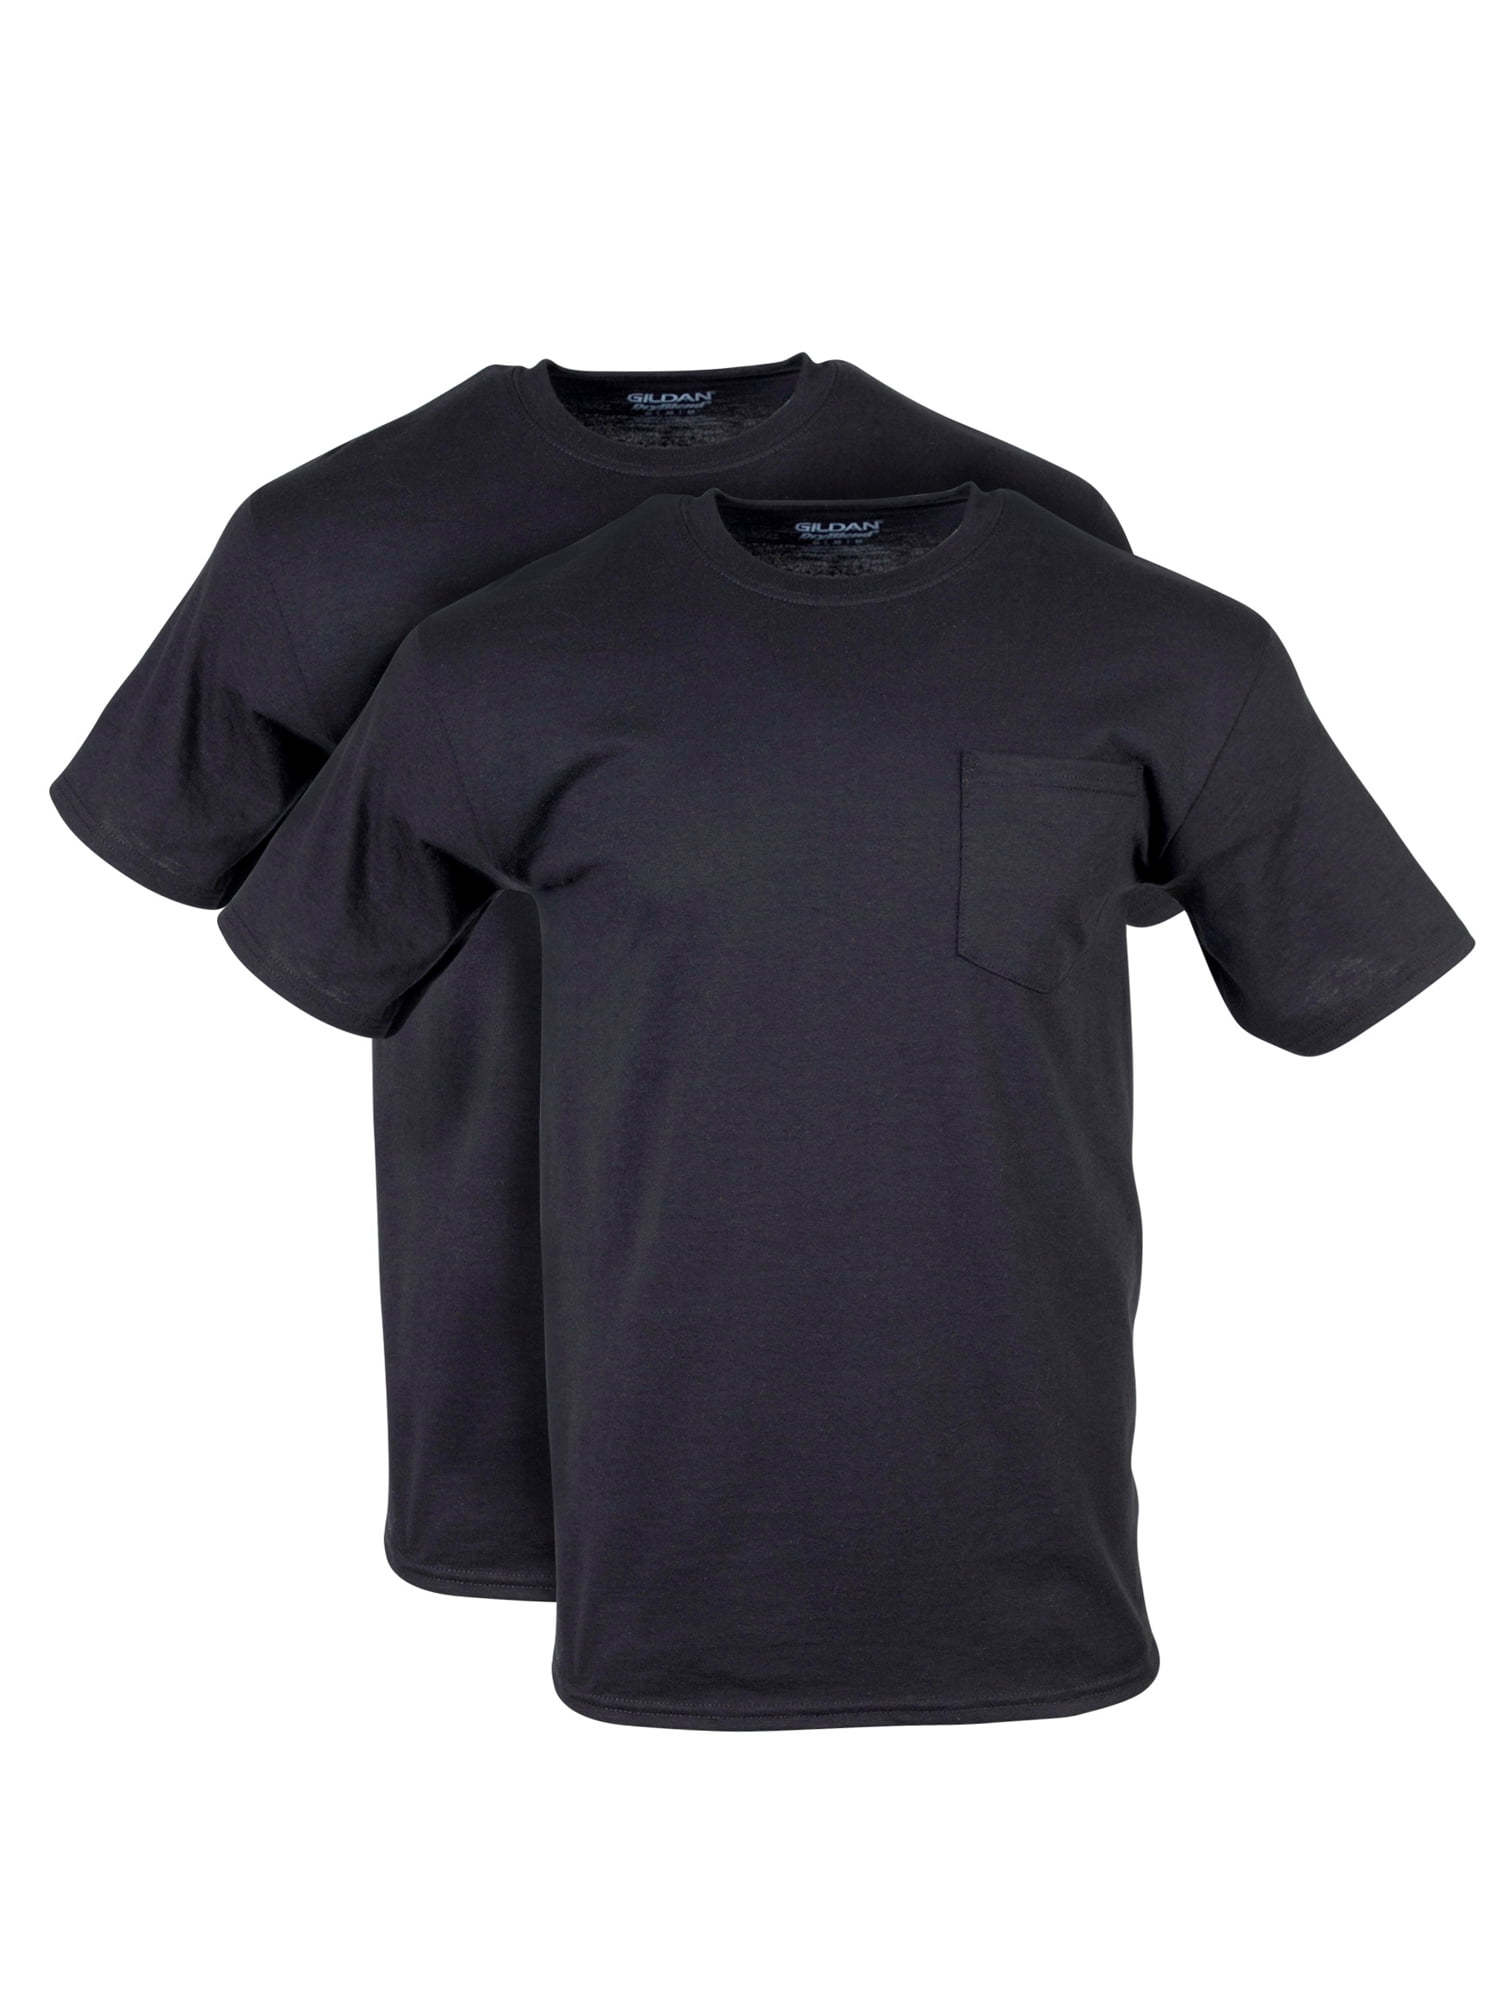 Men's Plain Cotton Marl Effect Front Pocket Short Sleeve Pack of 3 T-shirt Top